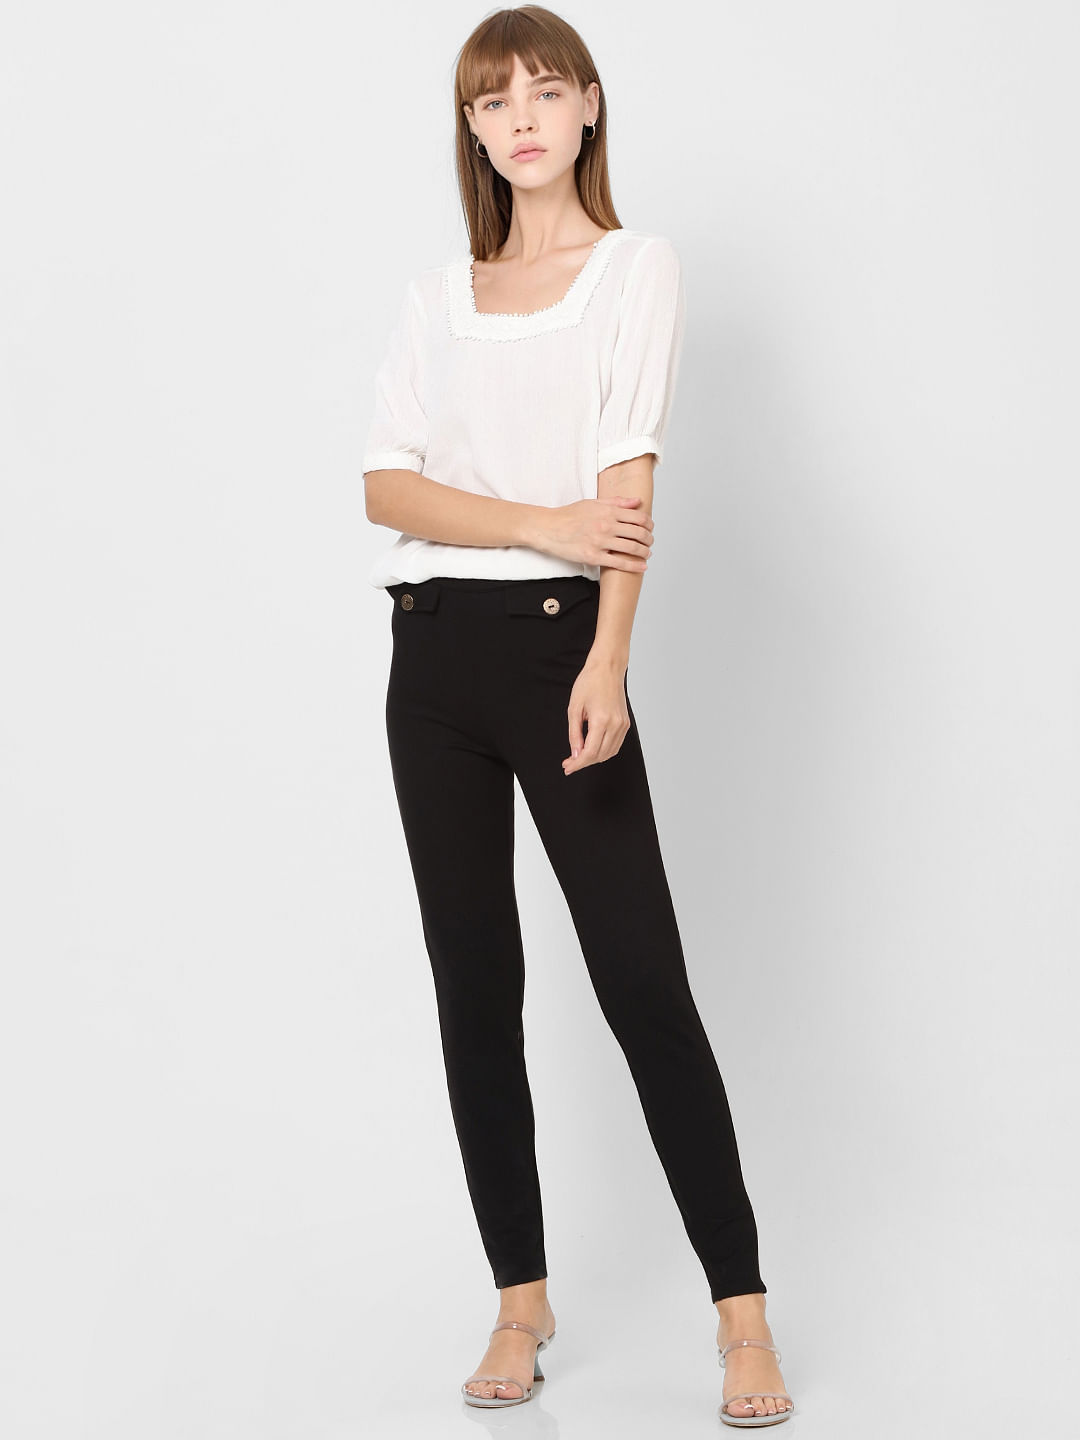 Buy STOP Black Solid Skinny Fit Polyester Blend Womens Formal Leggings   Shoppers Stop